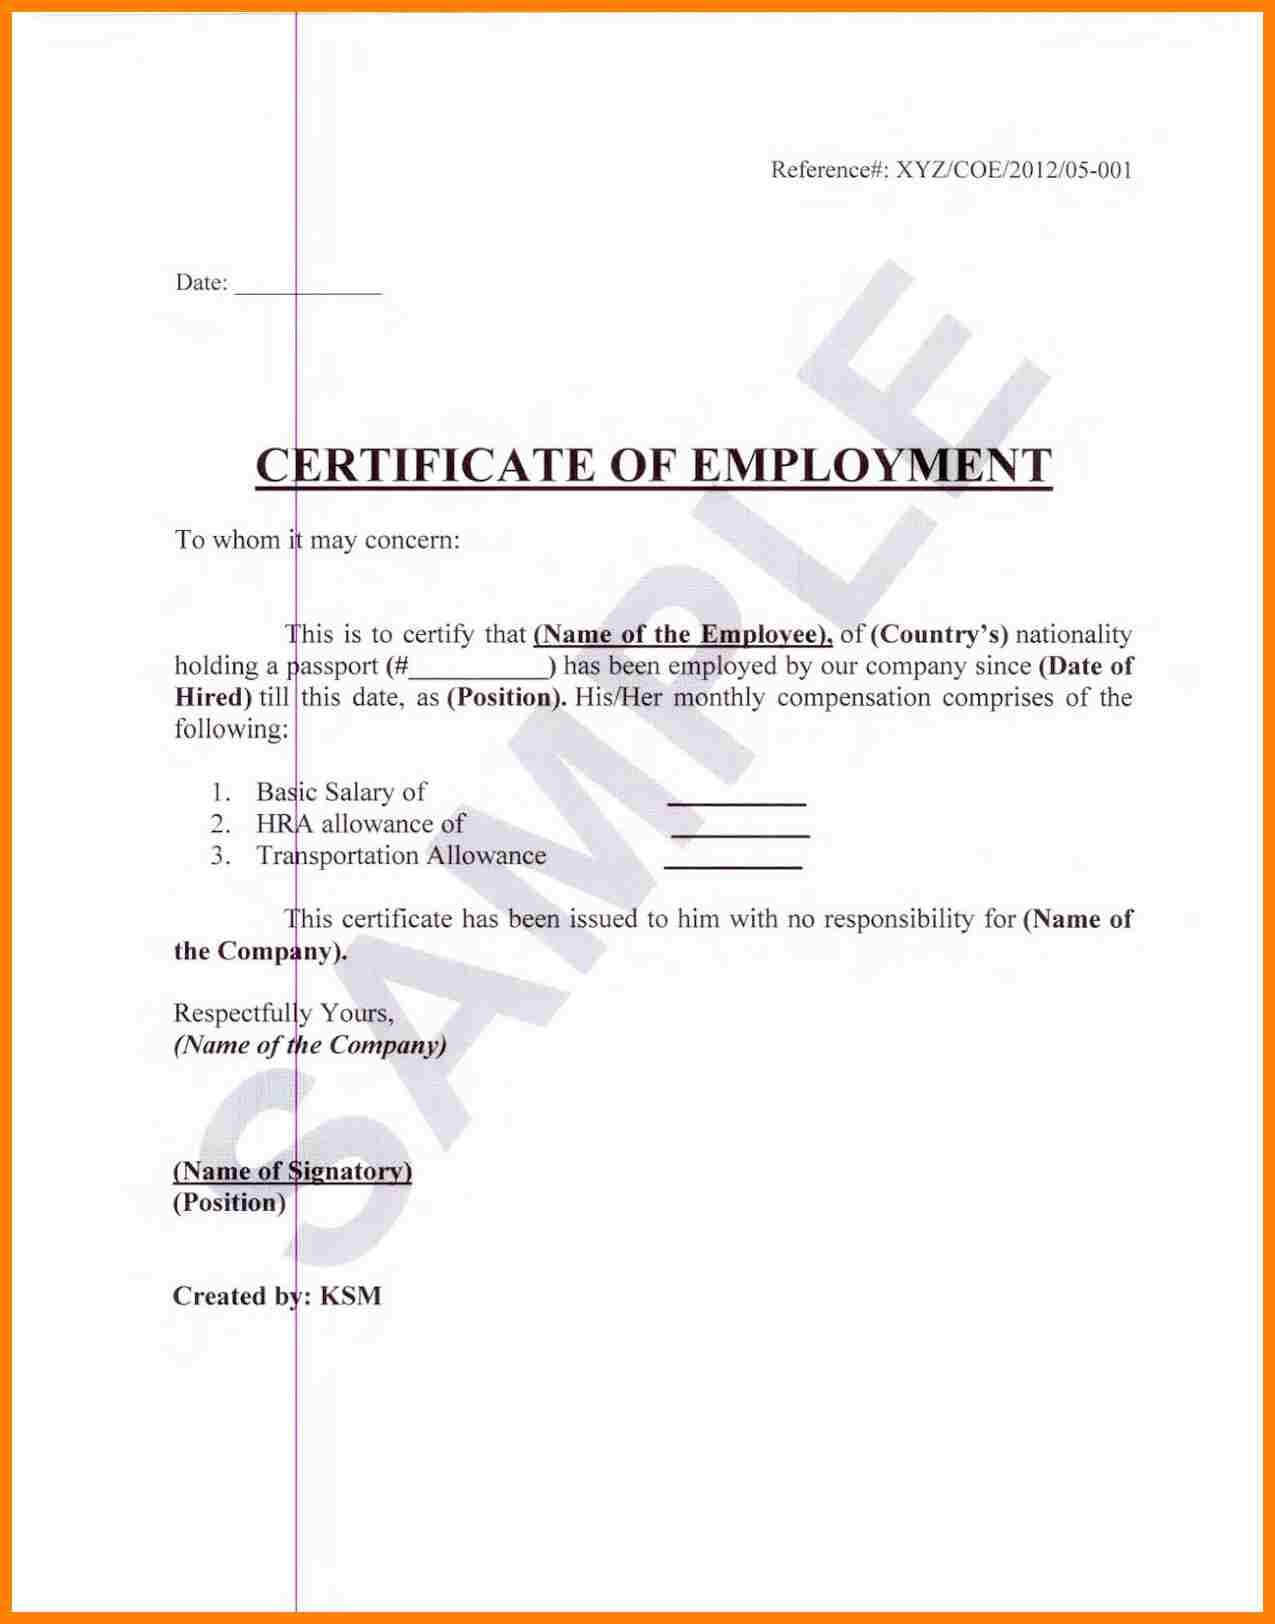 Sample Certification Employment Certificate Tugon Med Clinic Within Certificate Of Employment Template